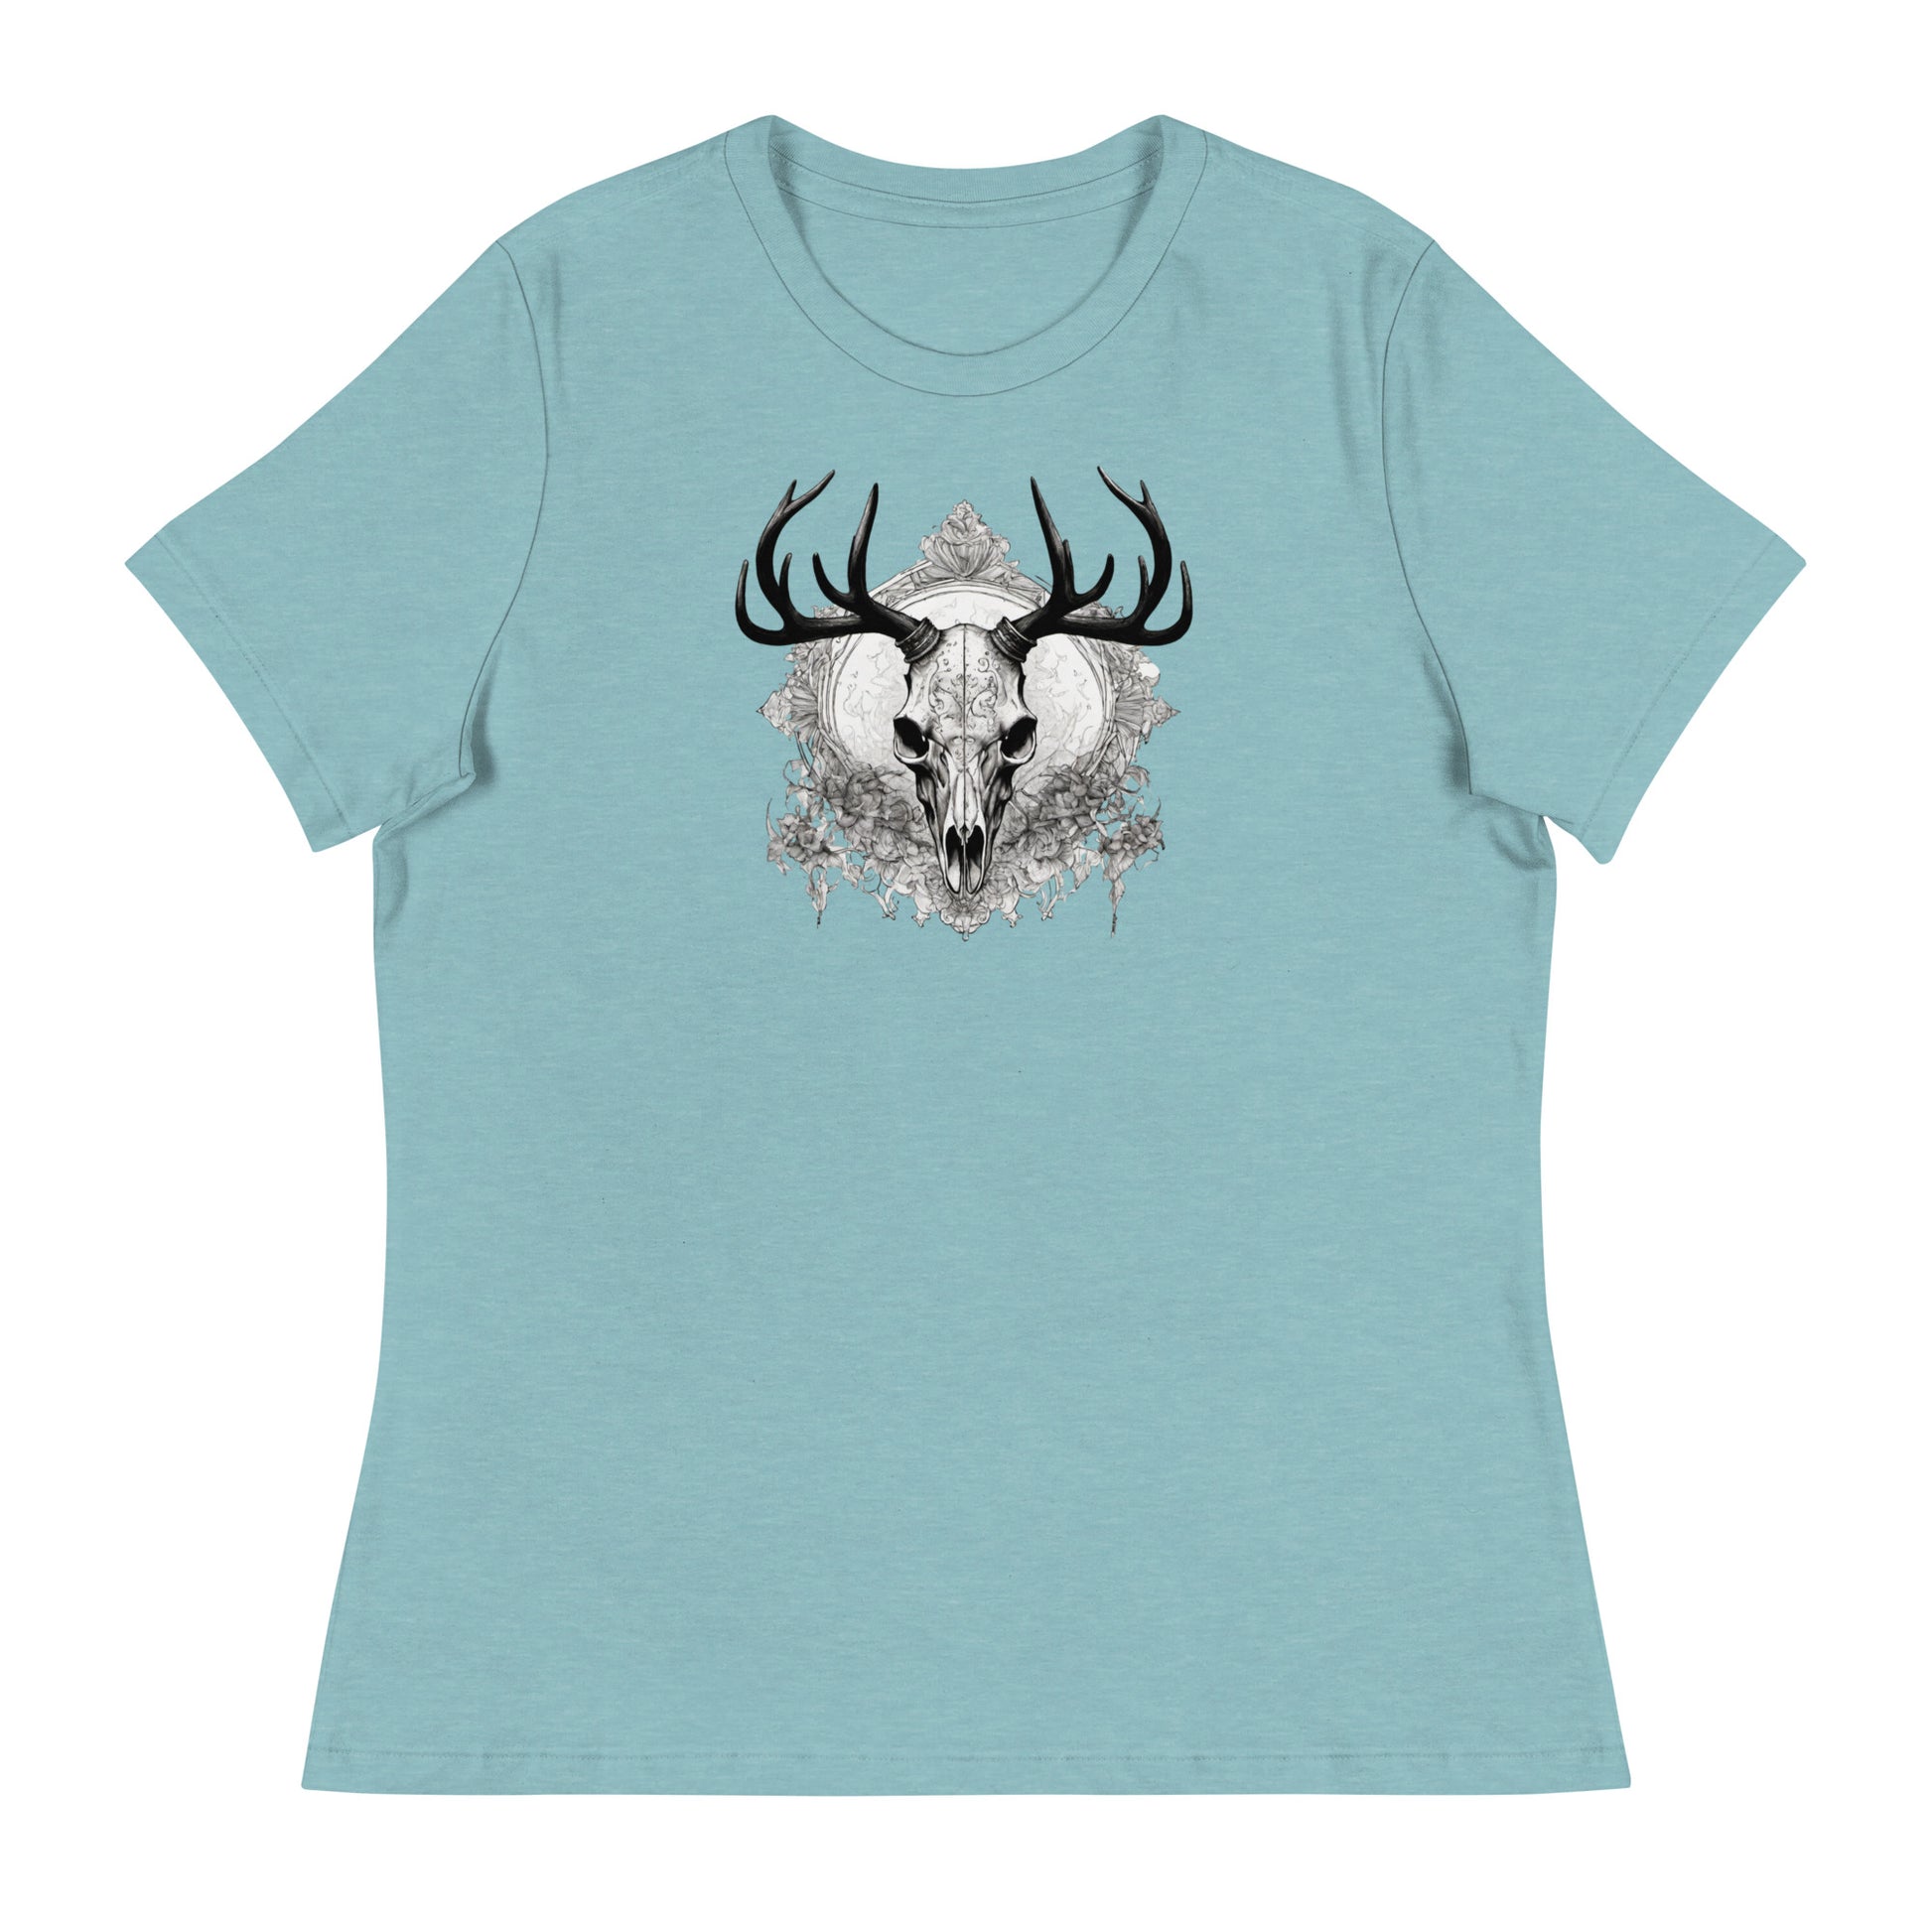 Decorative Deer Skull Women's T-Shirt Heather Blue Lagoon